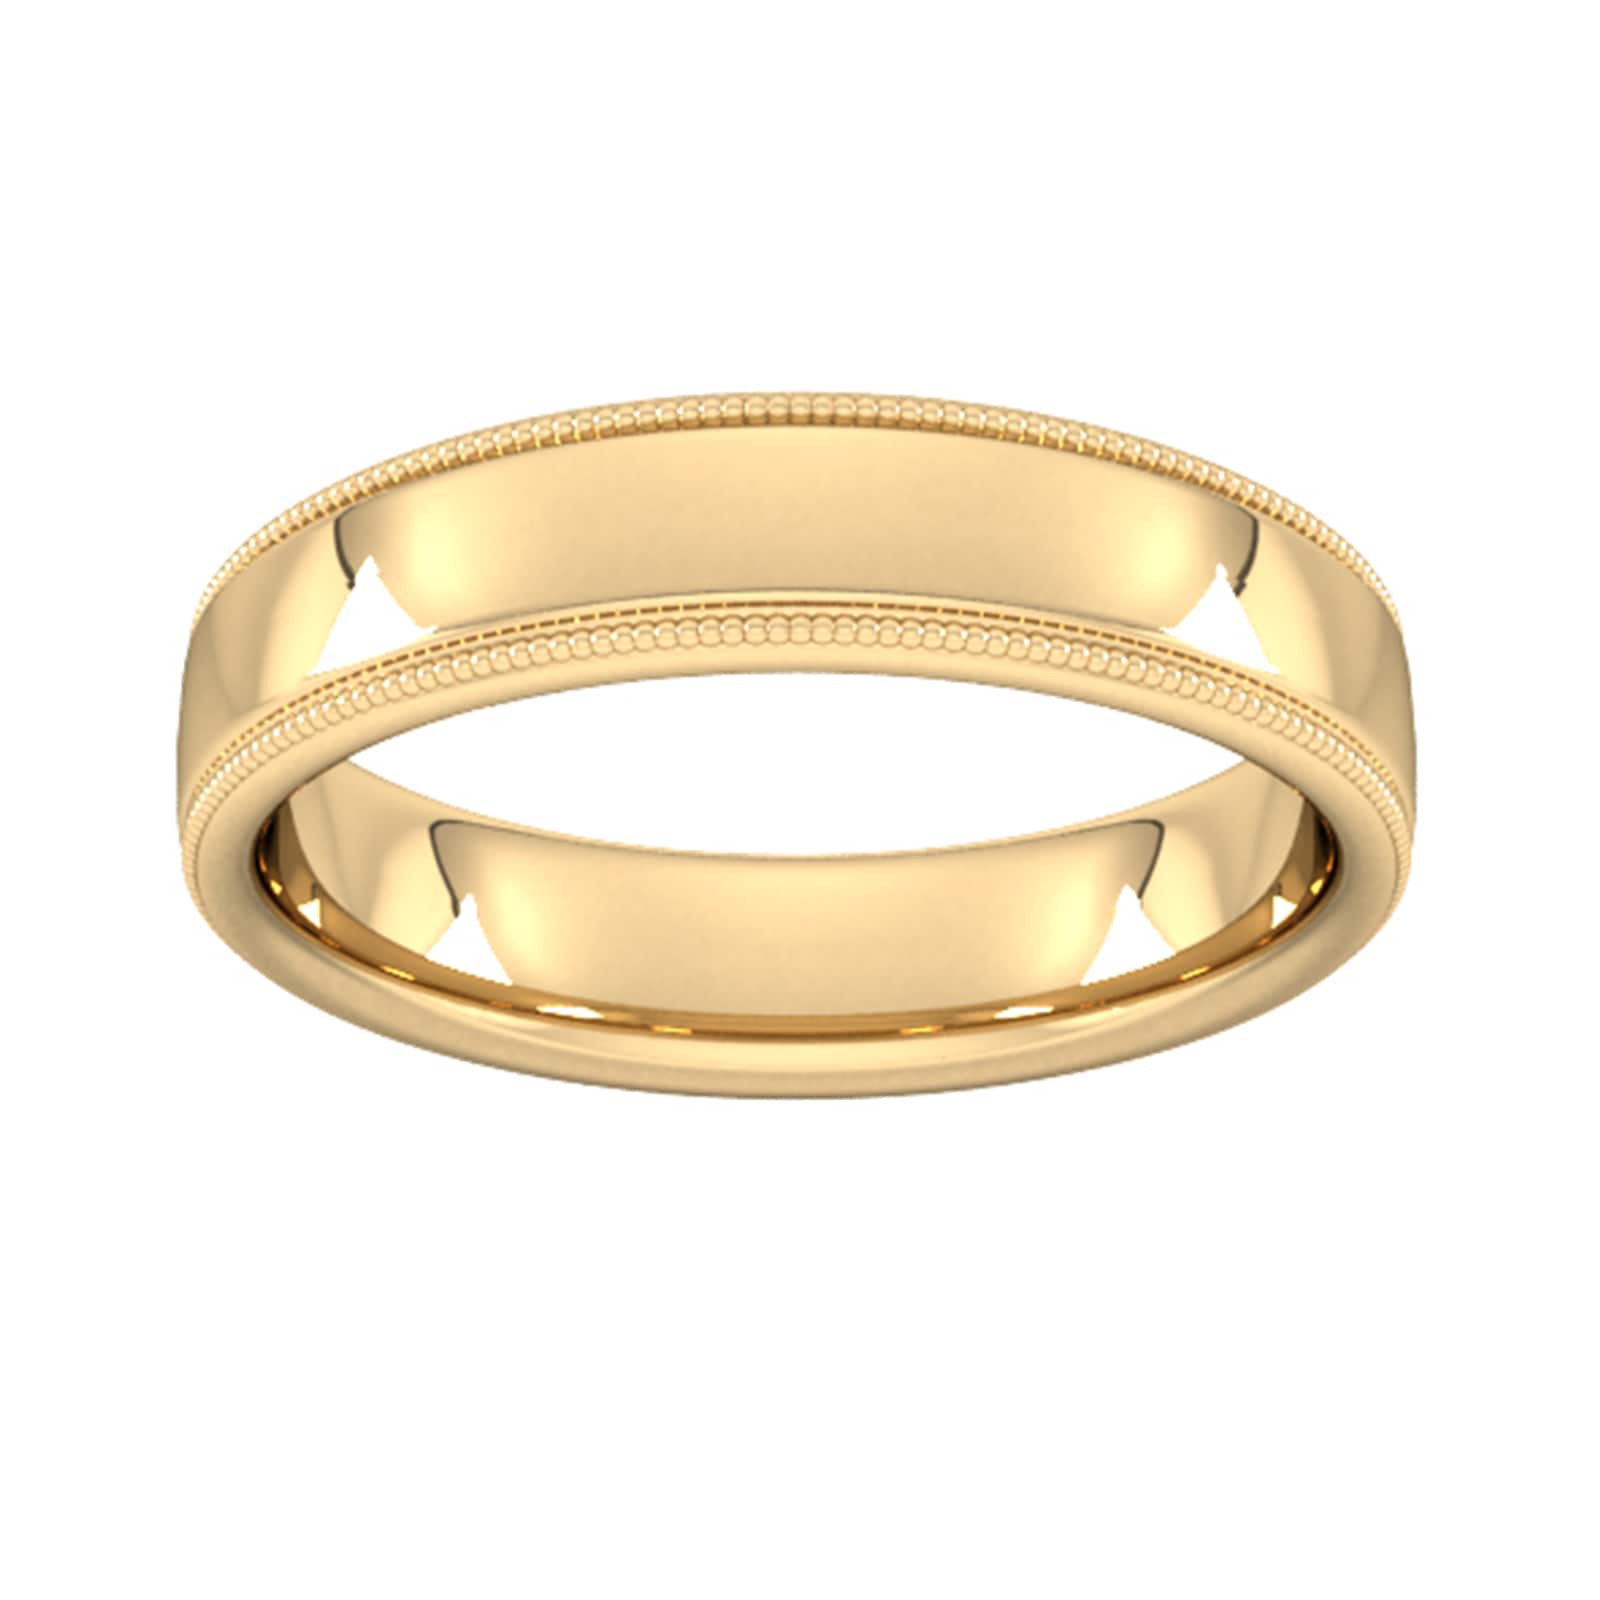 5mm Slight Court Extra Heavy Milgrain Edge Wedding Ring In 18 Carat Yellow Gold - Ring Size K